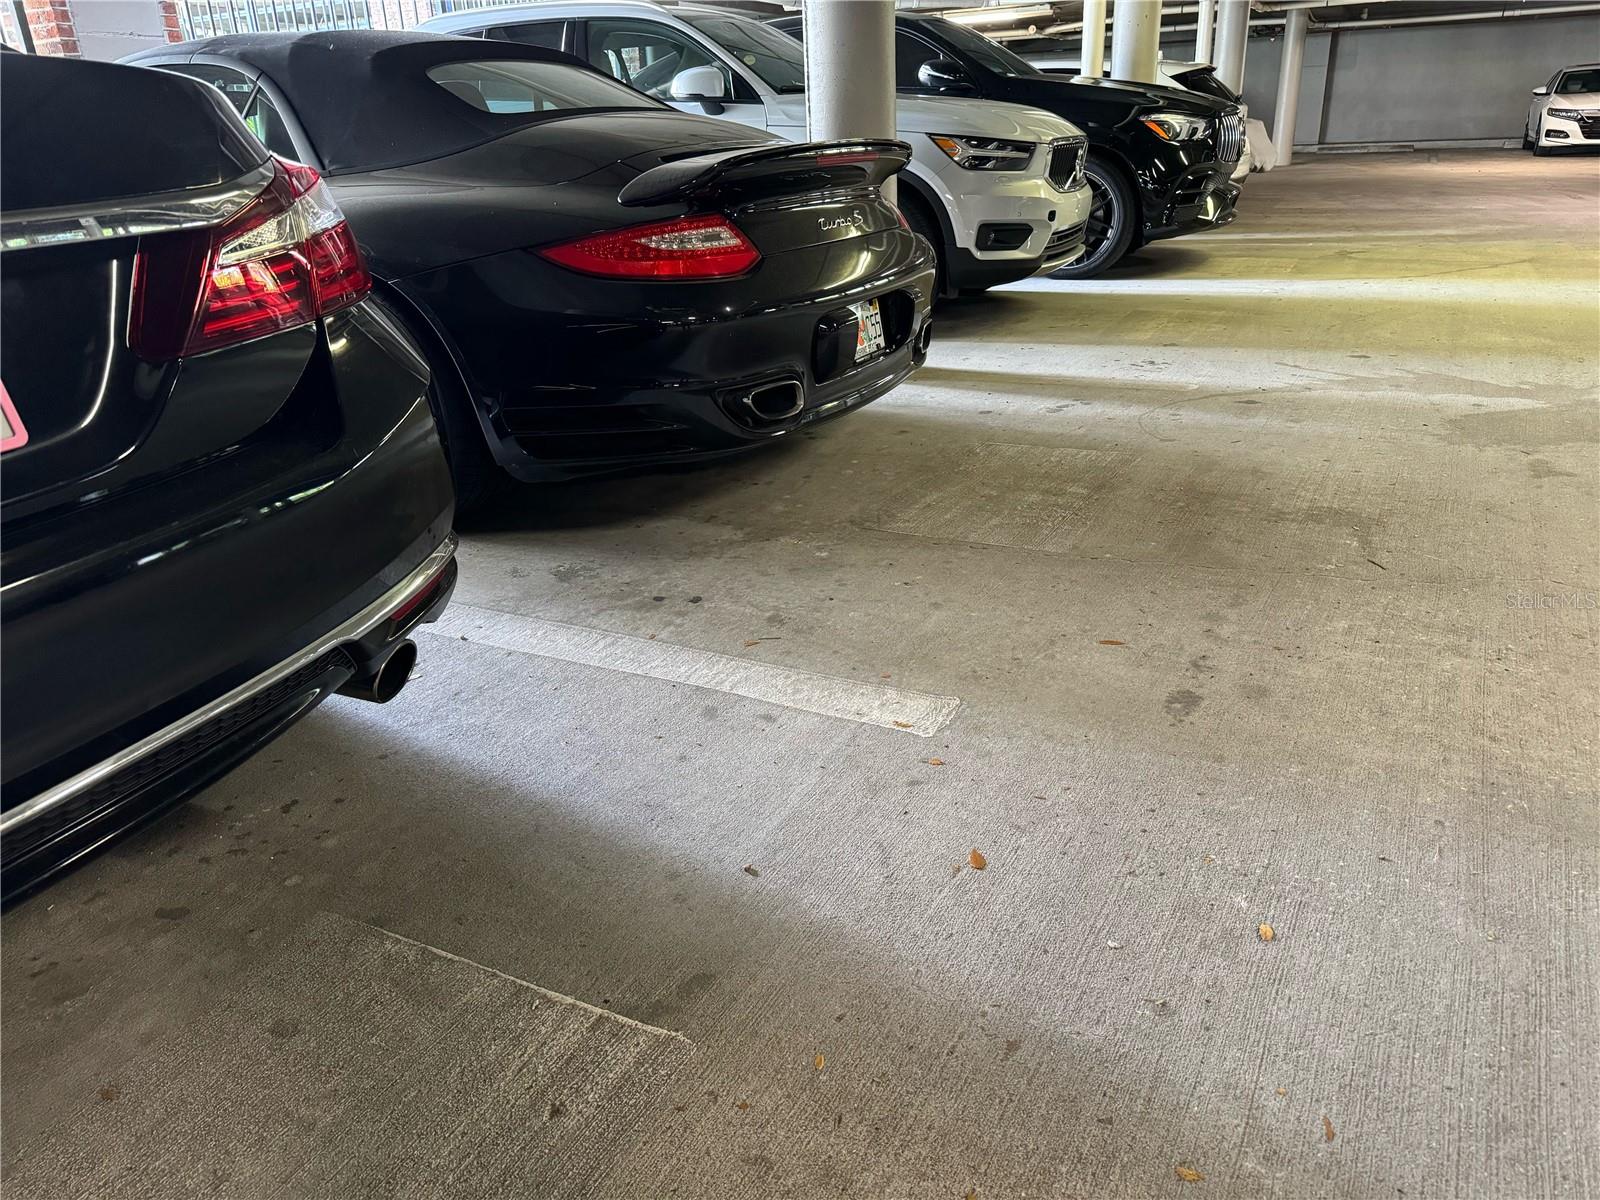 Unassigned parking spaces